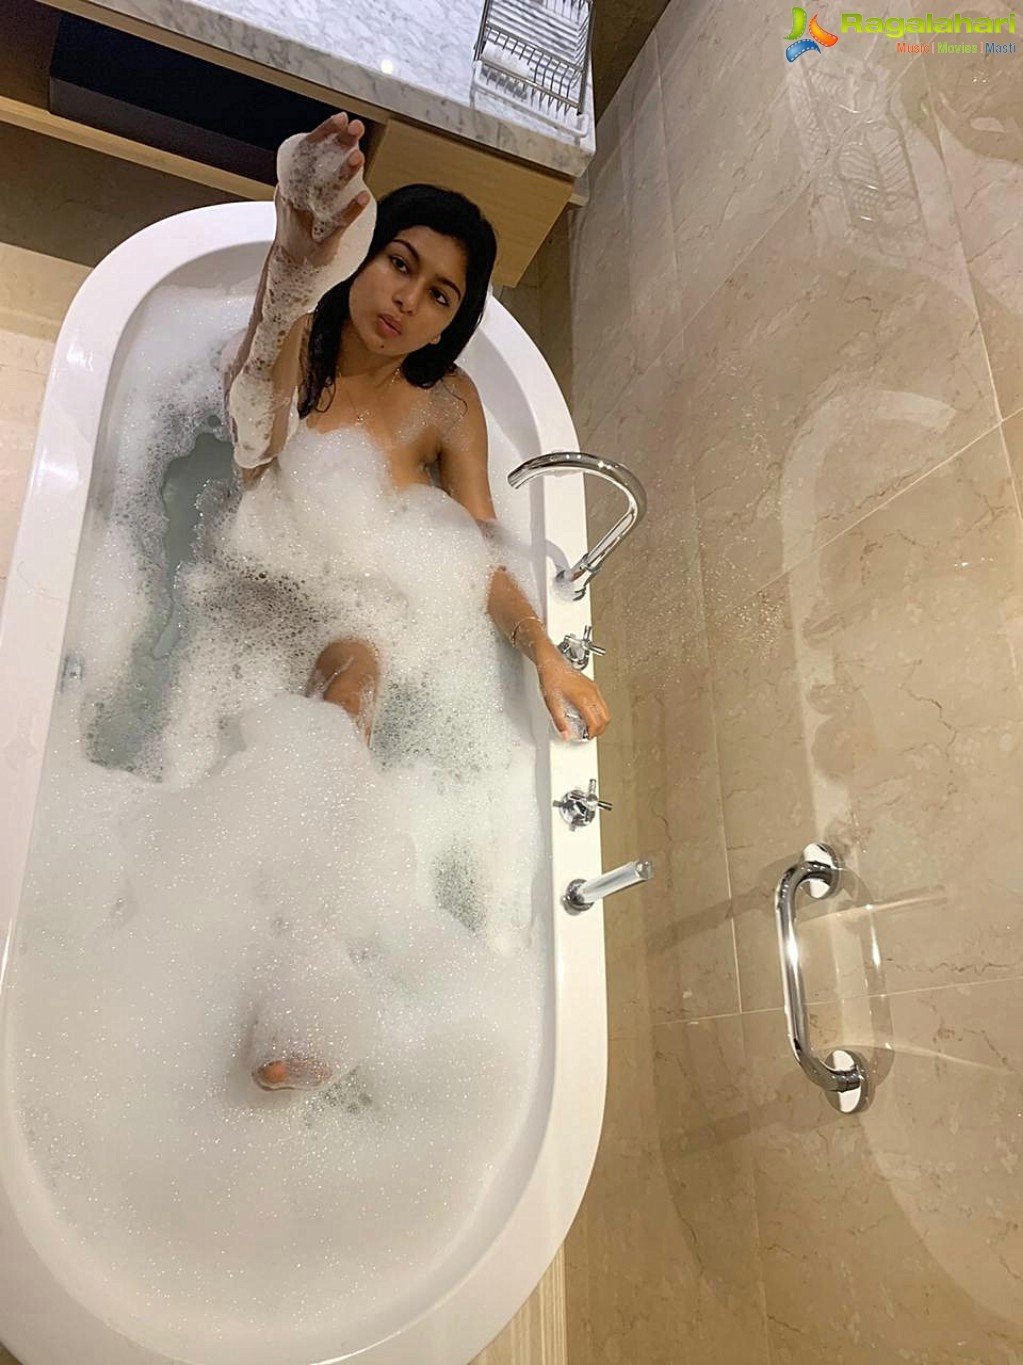 Akshatha Srinivas Taking Bubble Bath, Photo Gallery